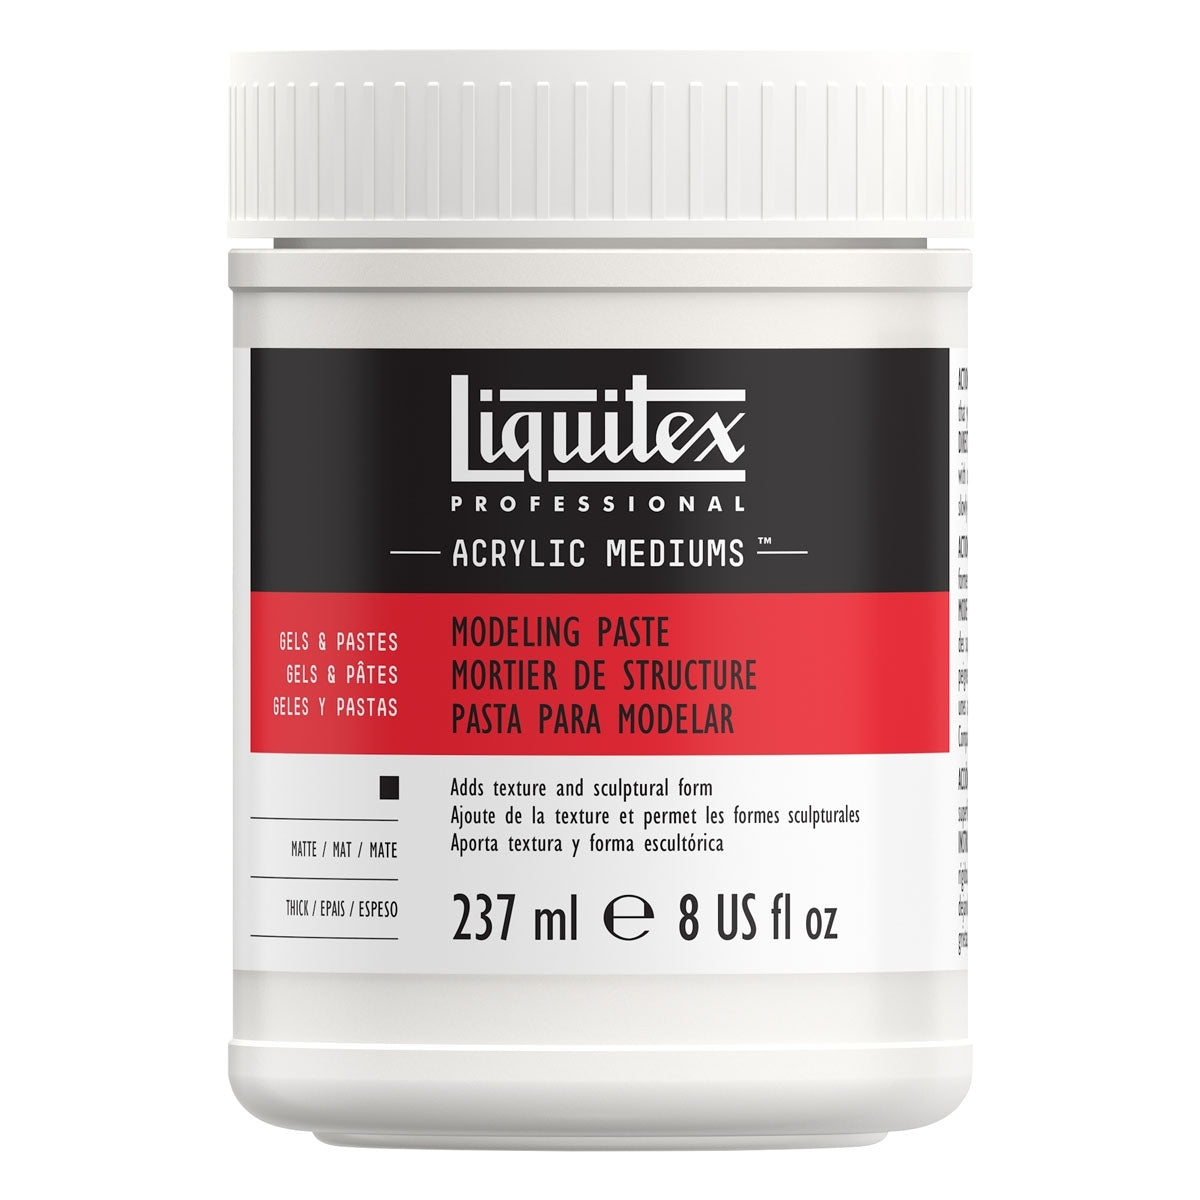 Liquitex - Modélisation de la pâte 237 ml